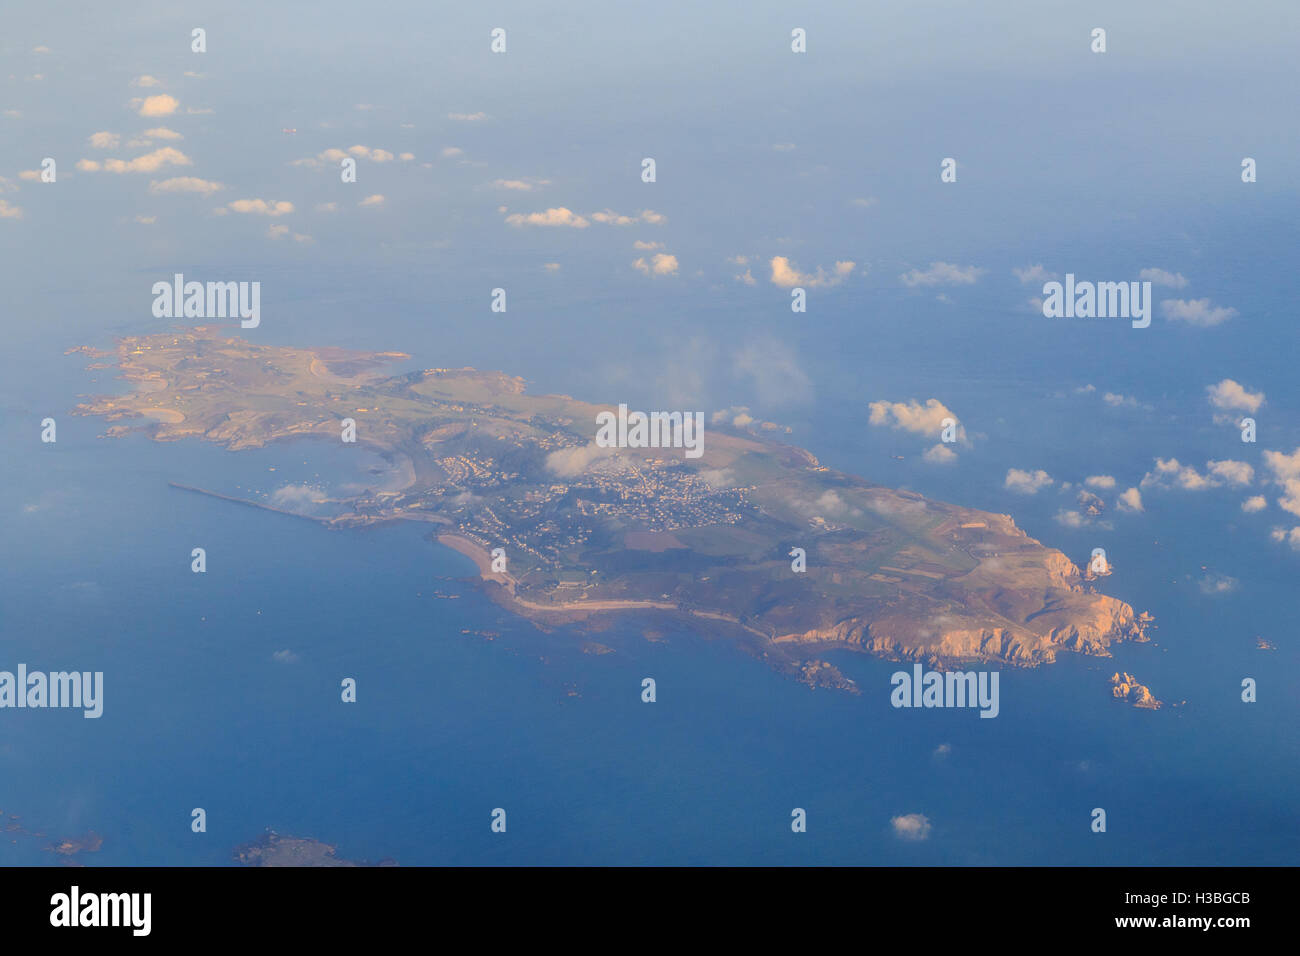 Alderney Channel Islands taken from a plane Stock Photo